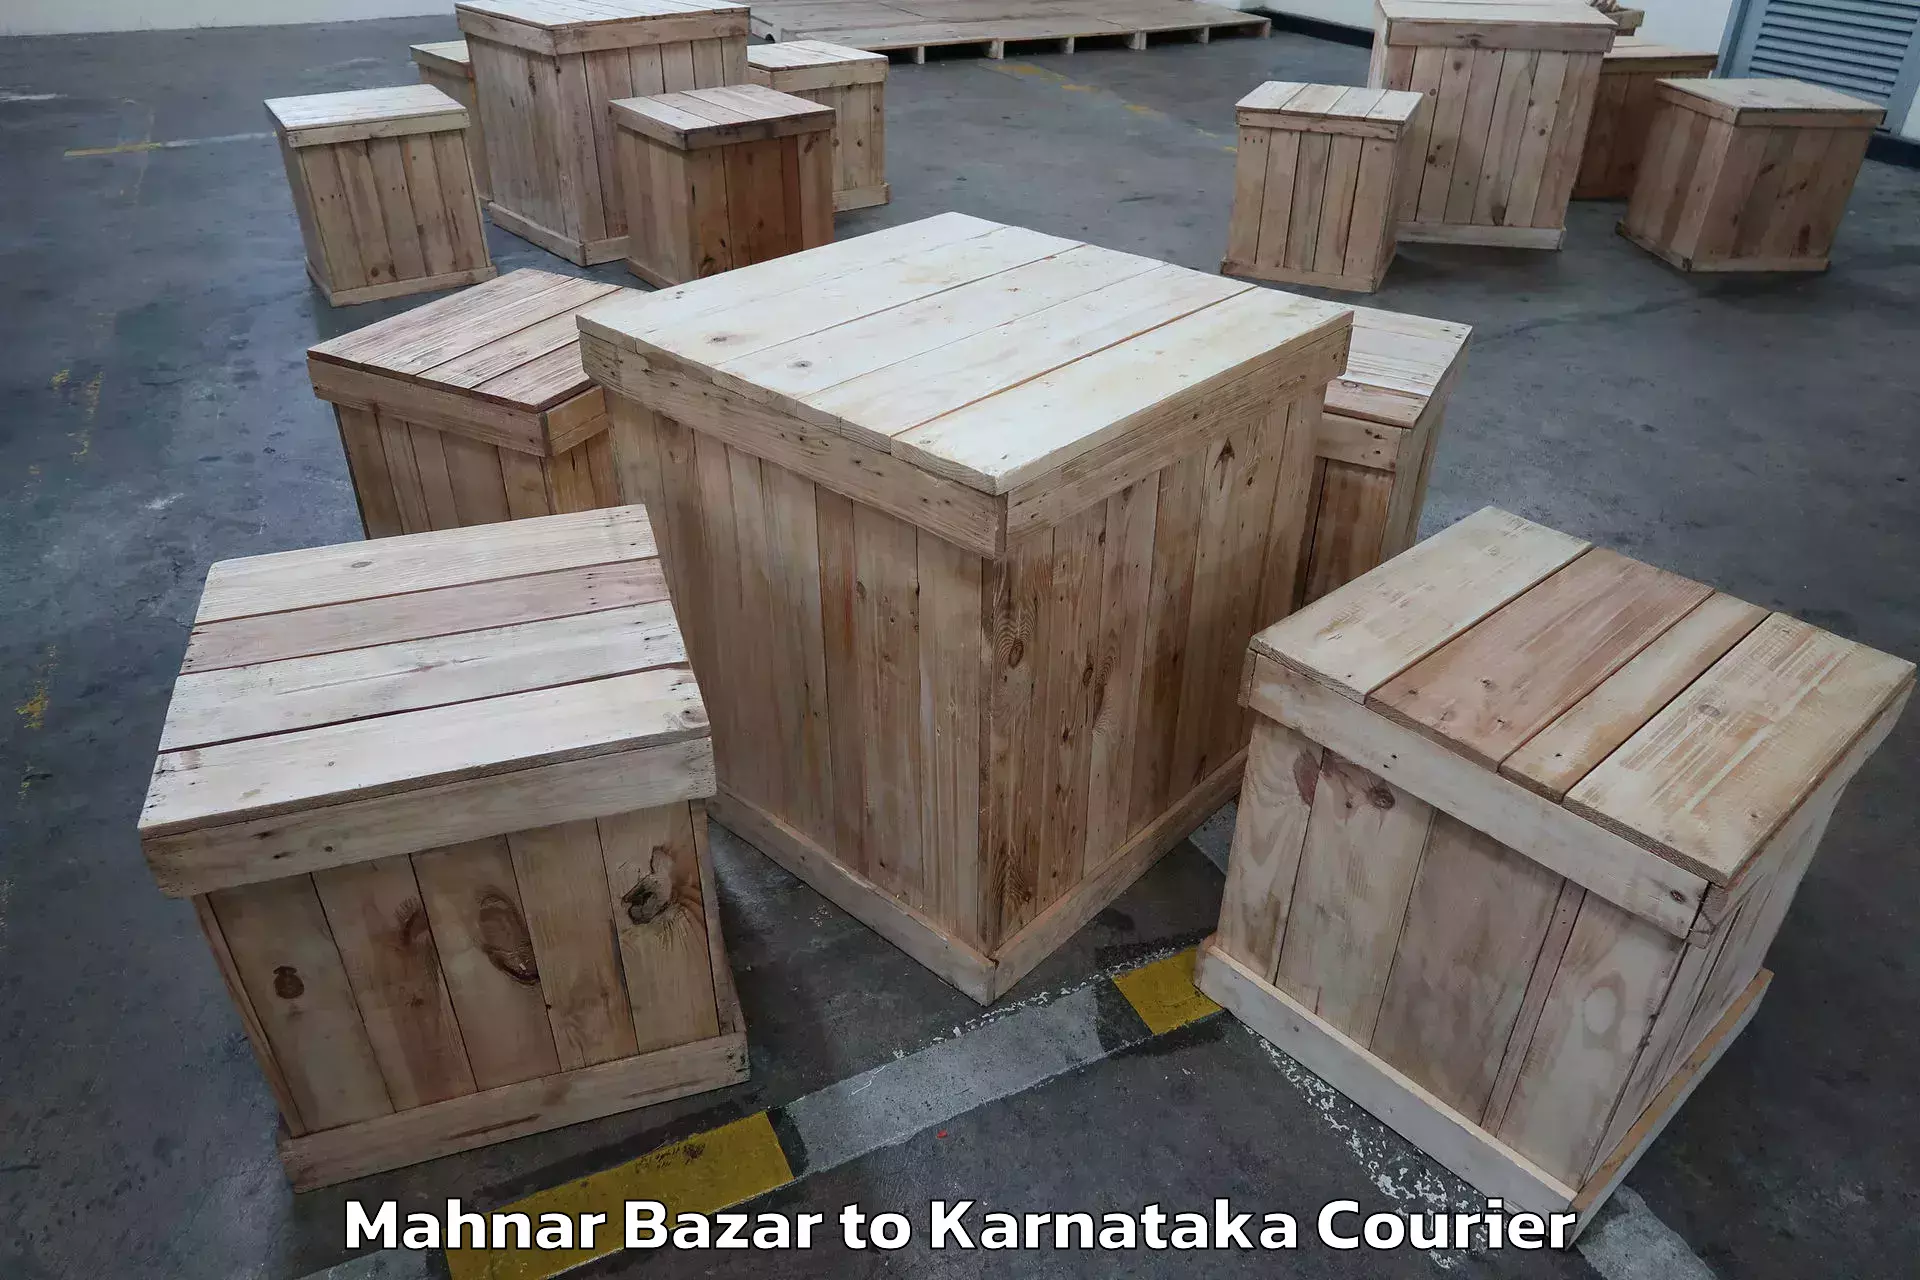 Trusted relocation experts Mahnar Bazar to Karnataka